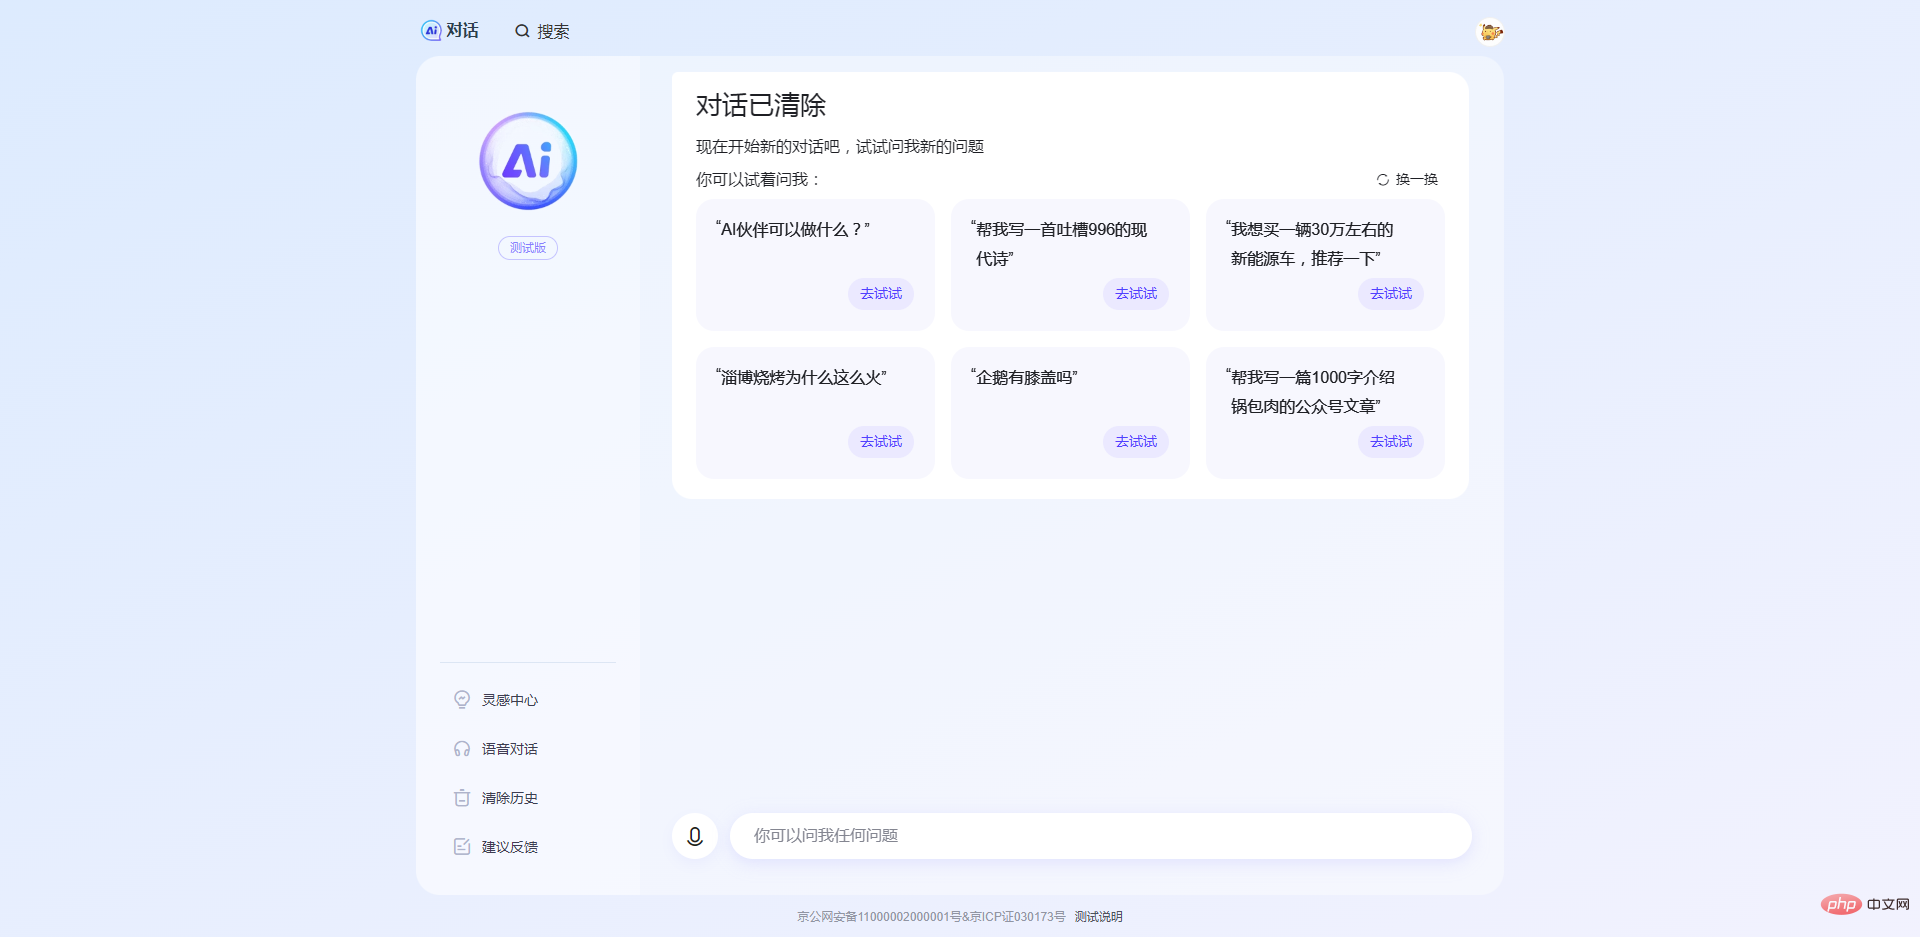 Benchmarking Bing Chat: Baidu Search’s small-scale public beta “conversation” function, based on the Wenxin Yiyan language model